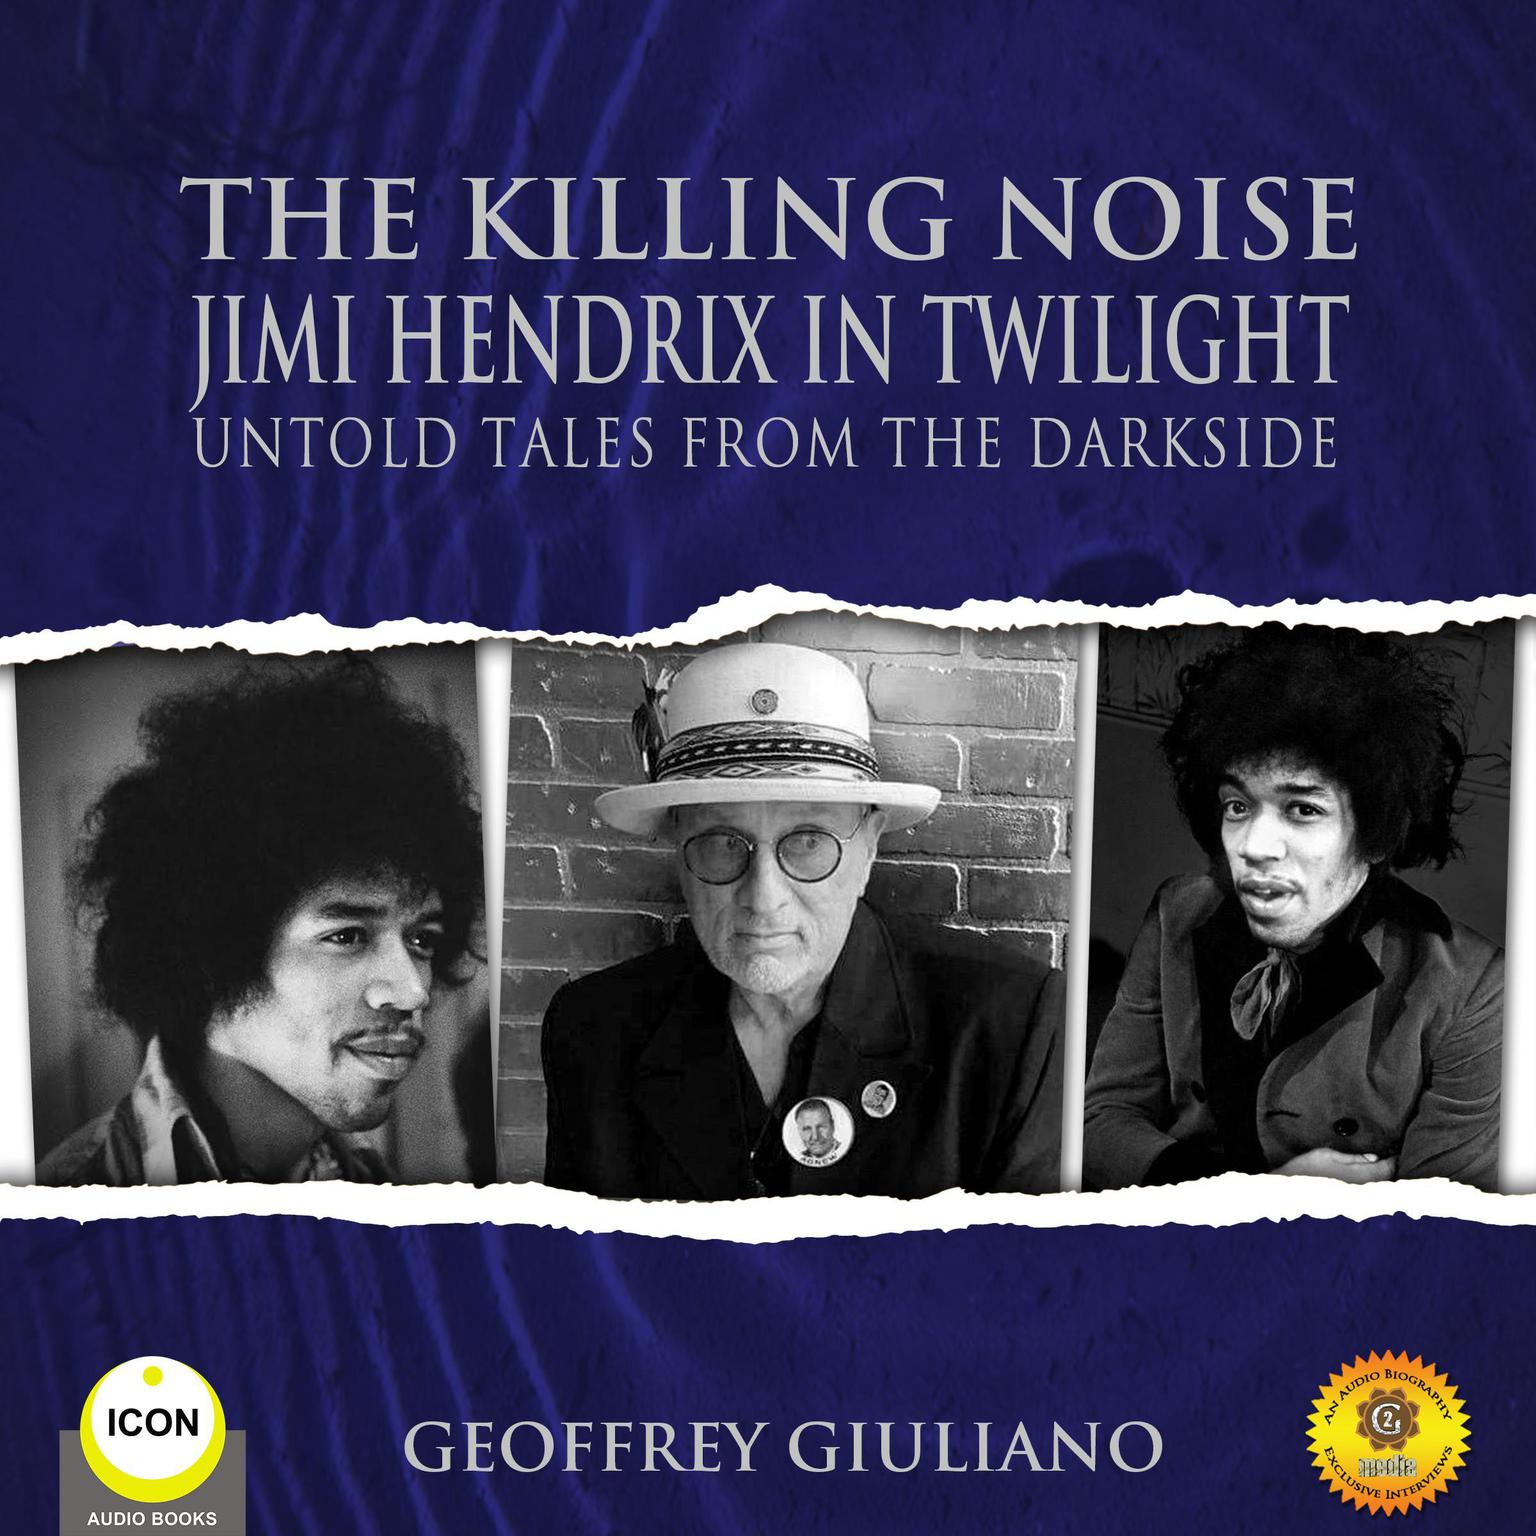 The Killing Noise Jimi Hendrix in Twilight - Untold Tales From the Darkside Audiobook, by Geoffrey Giuliano